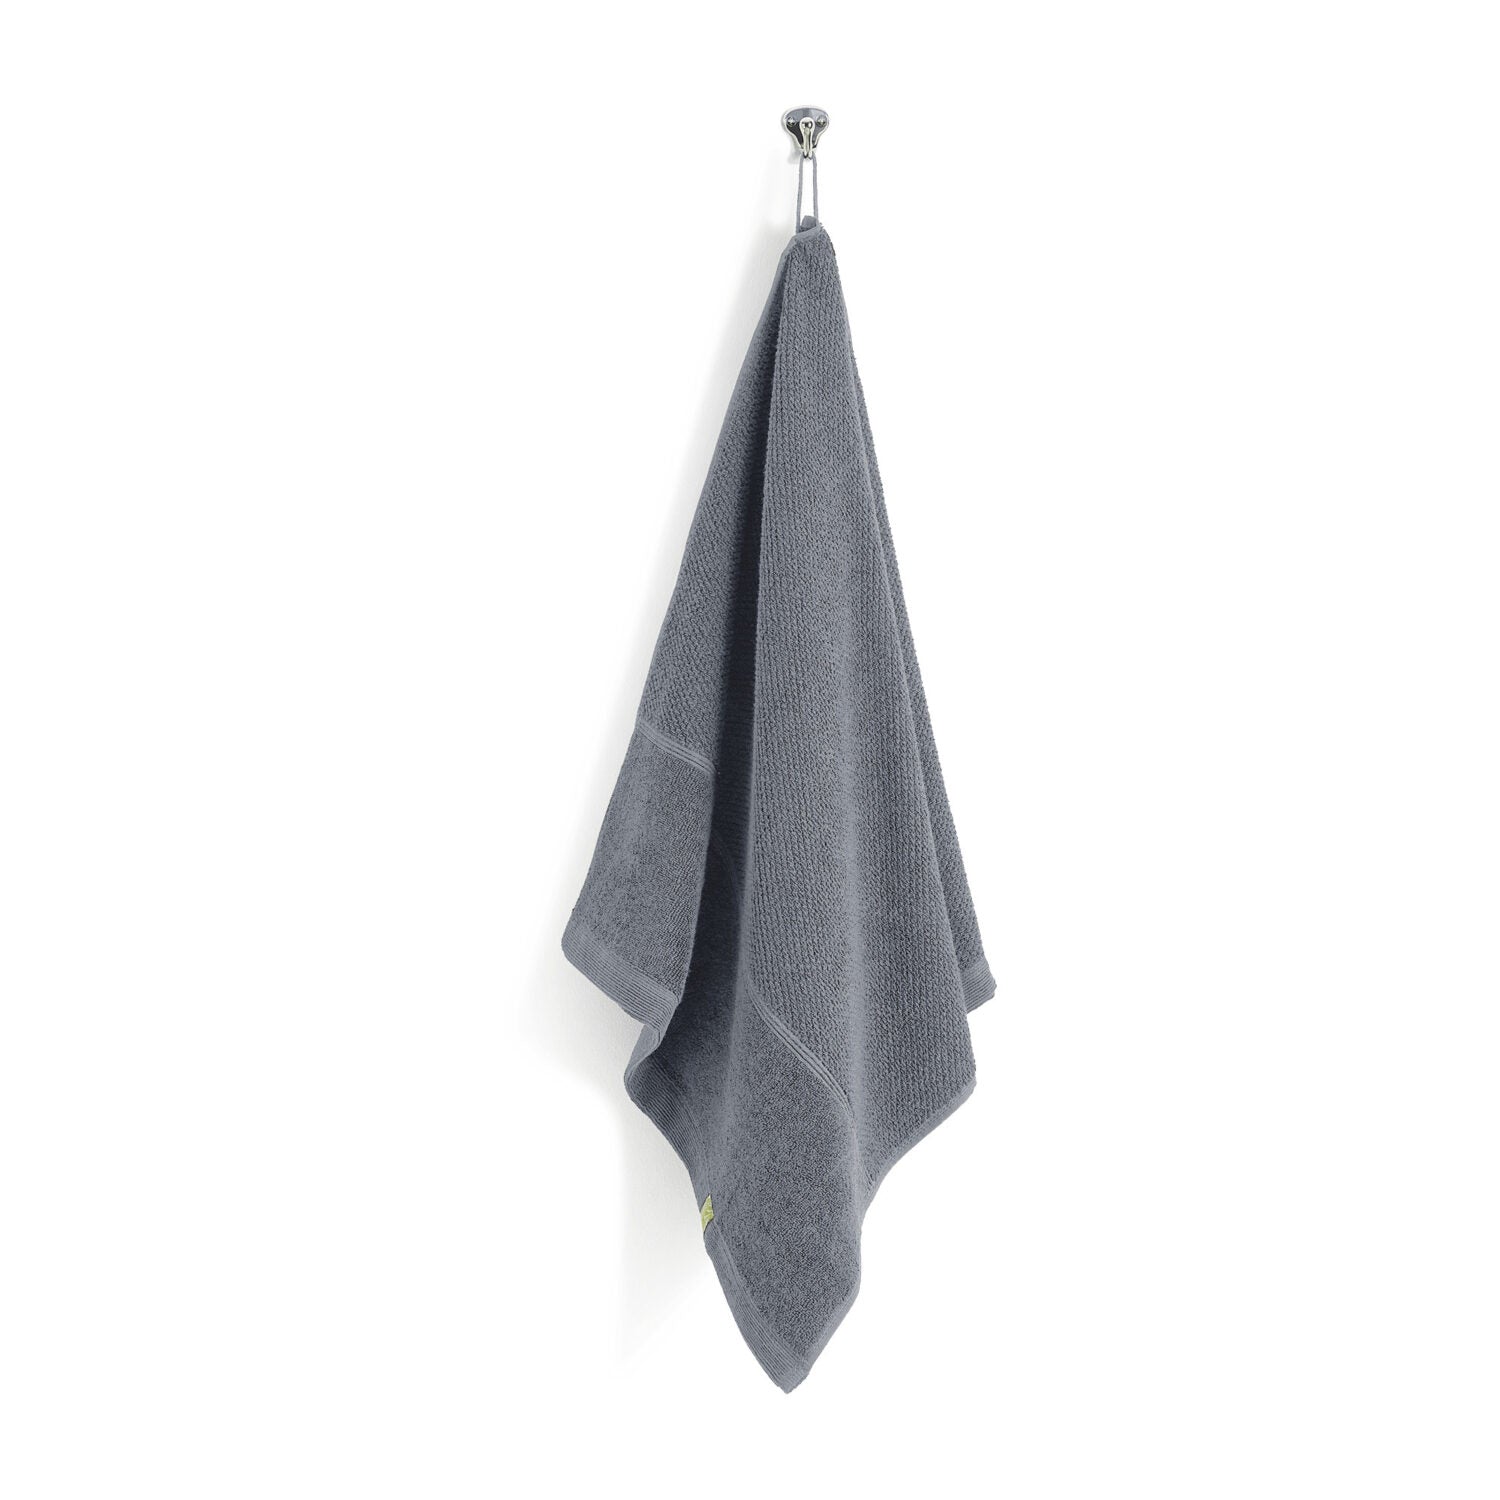 Kushel Handtuch The Hand Towel - verschiedene Farben_foggy-grey2